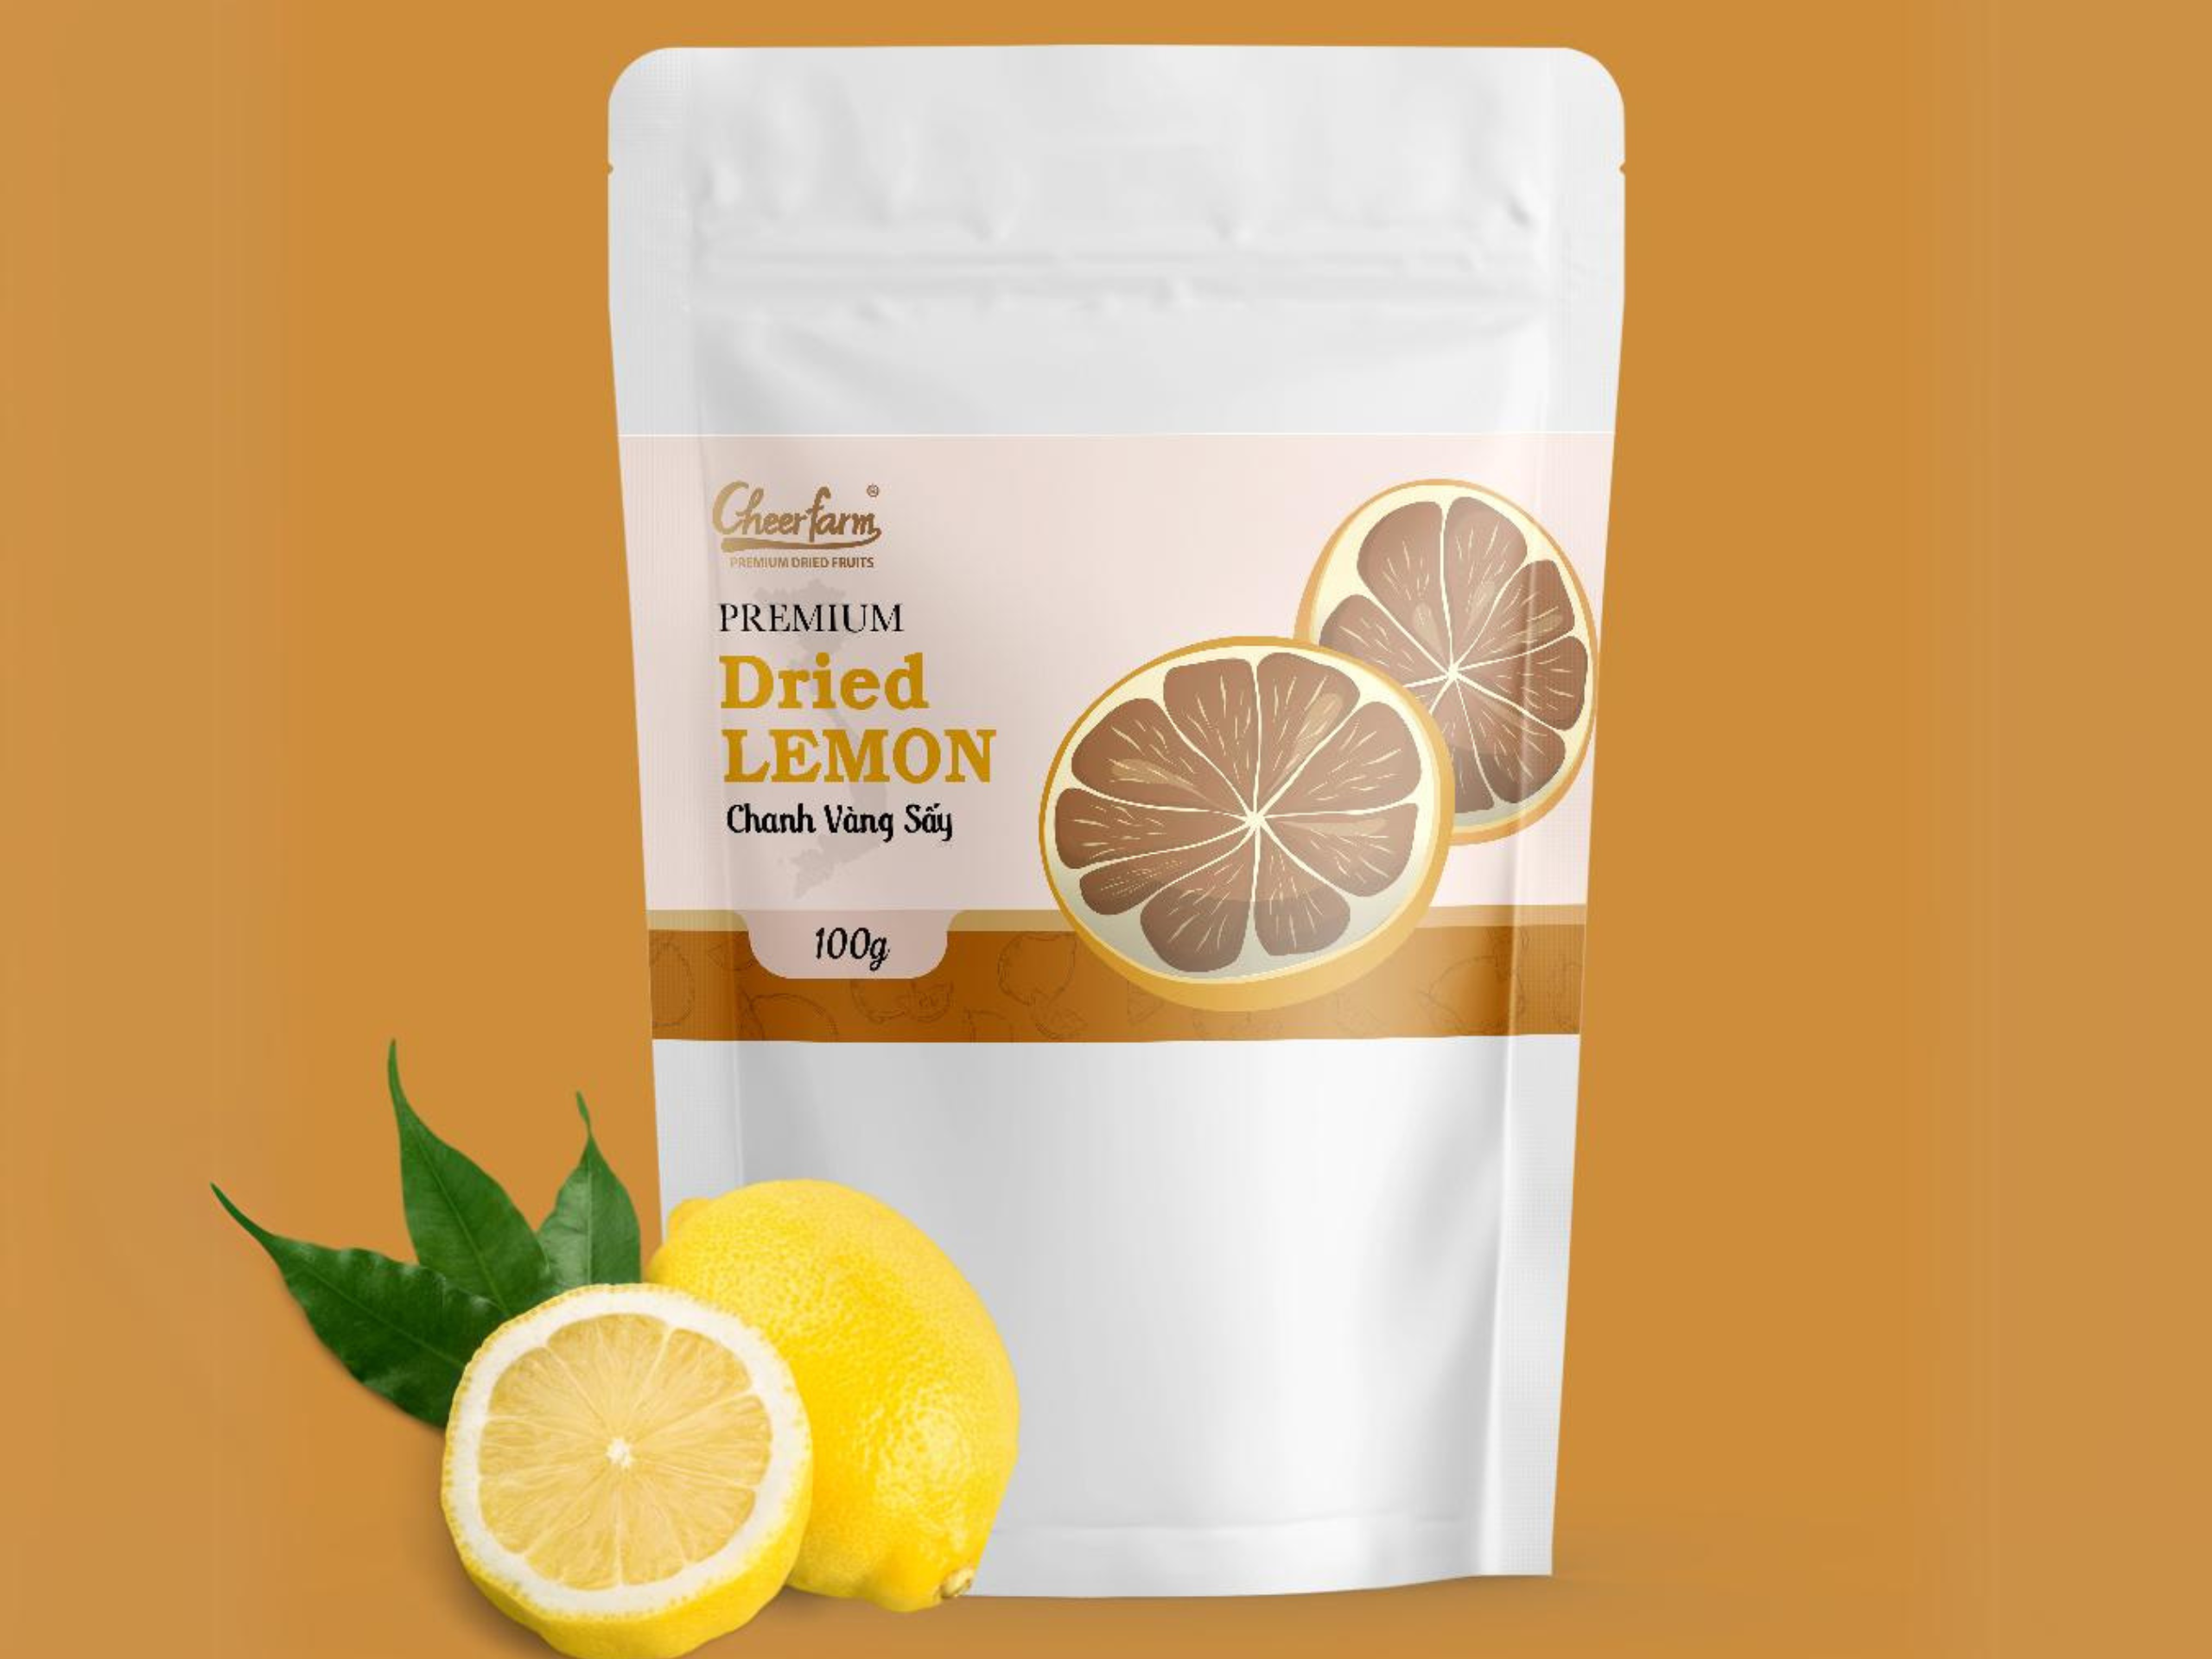 Packaging lemon in cheerfarm, premium dried fruits